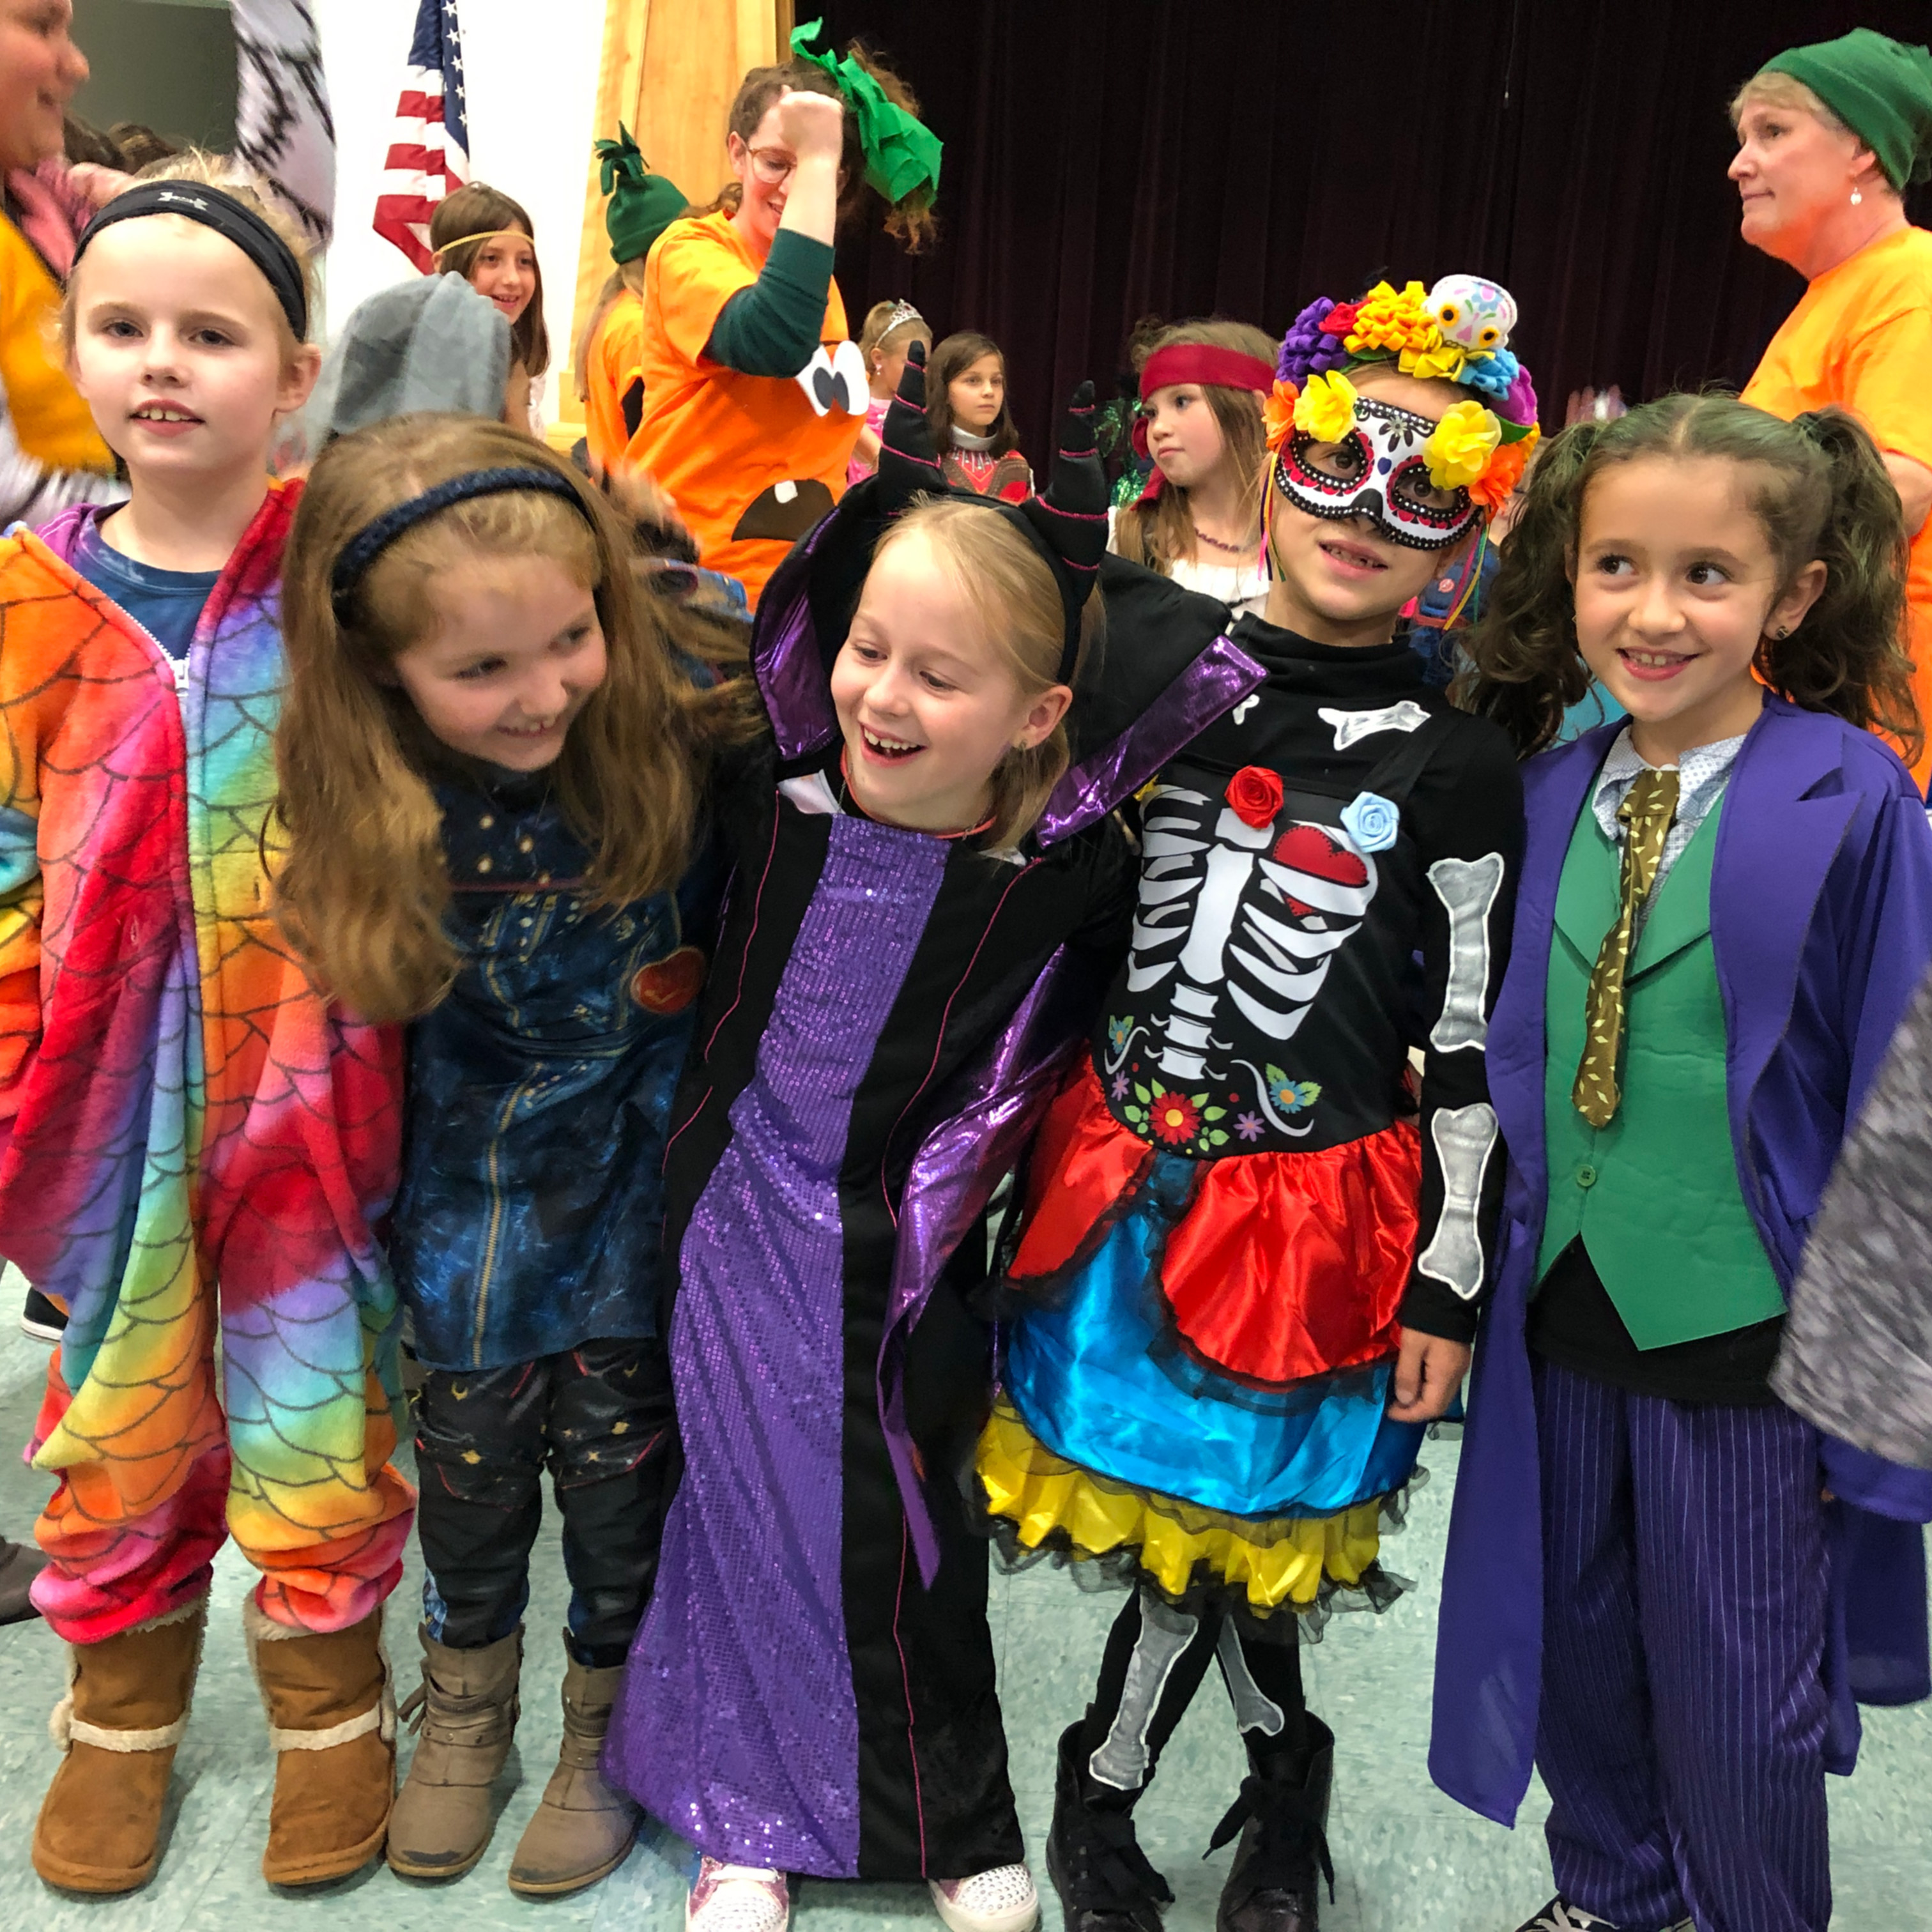 A little rain won't stop our Halloween fun! - Greenfield Elementary School